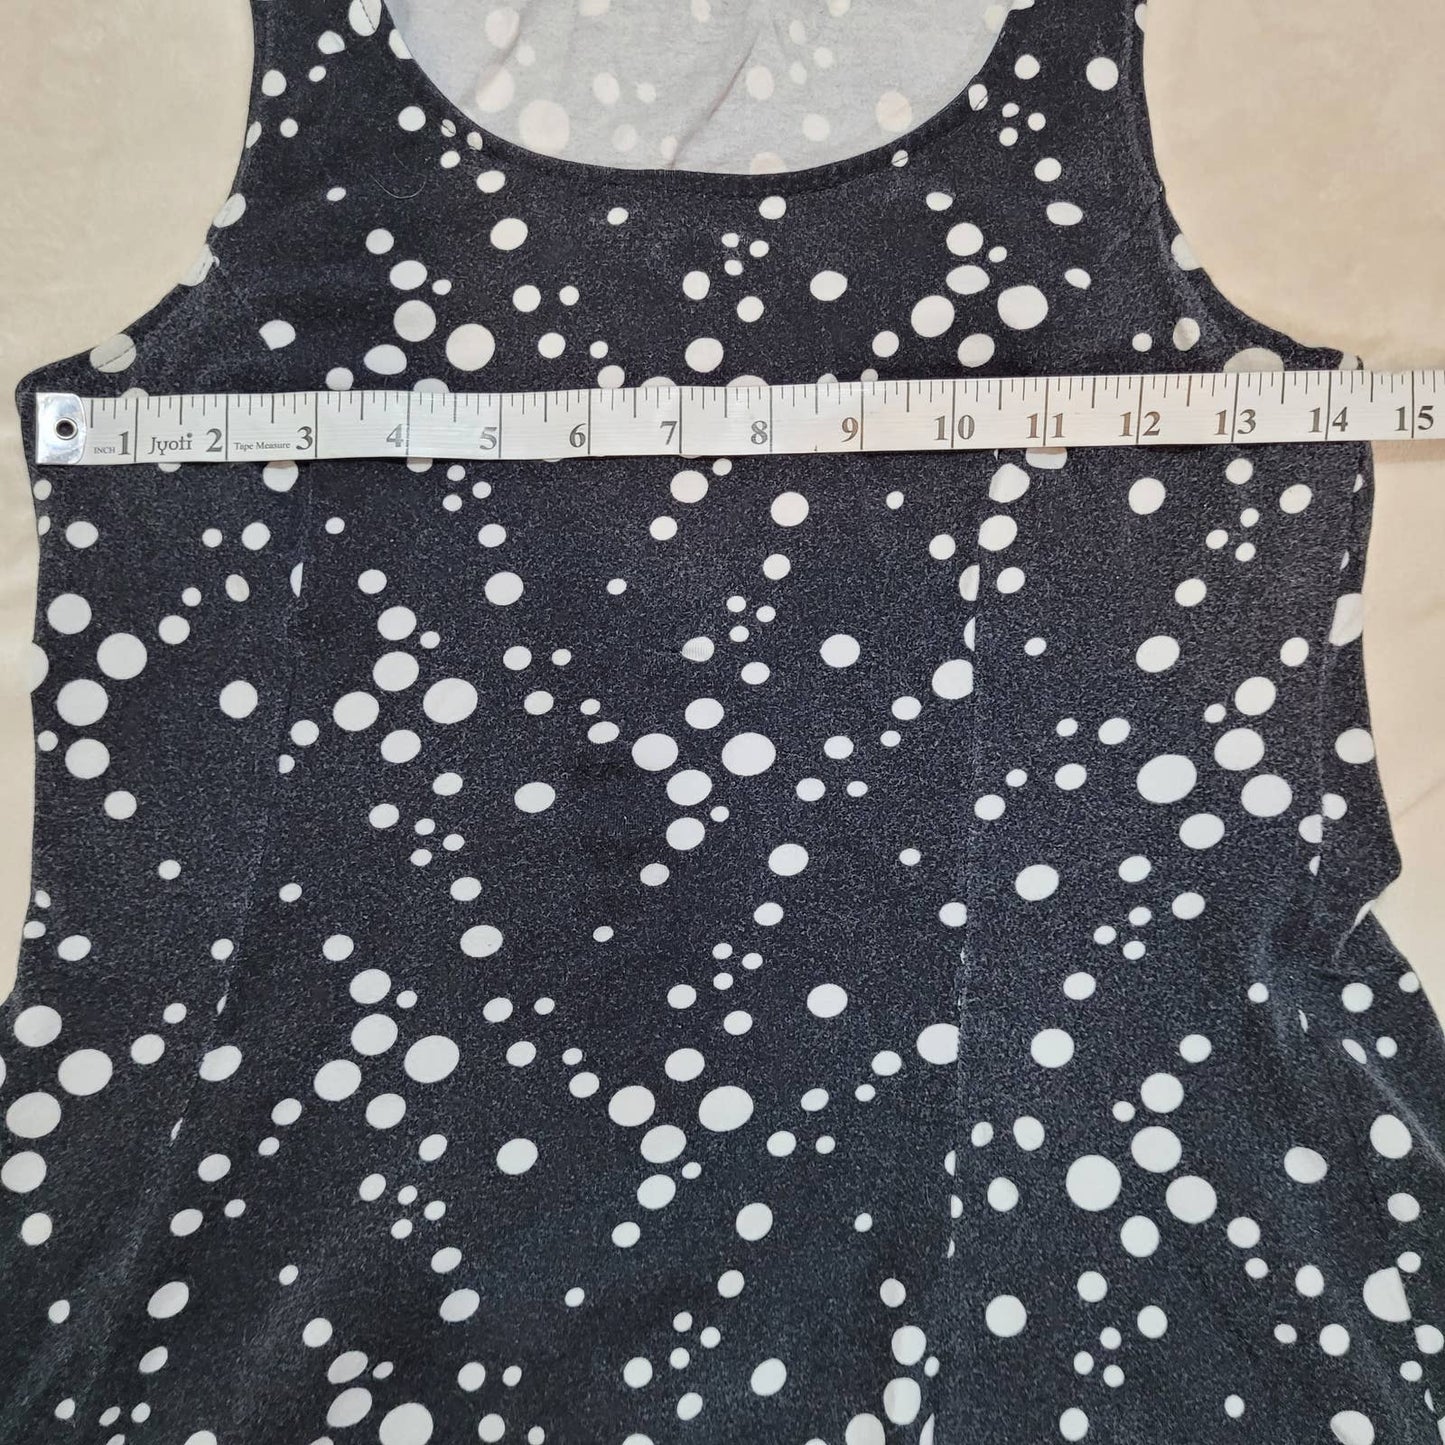 Suzy Shier Black and White Polka Dot Skater Dress - Size MediumMarkita's ClosetSuzy Shier